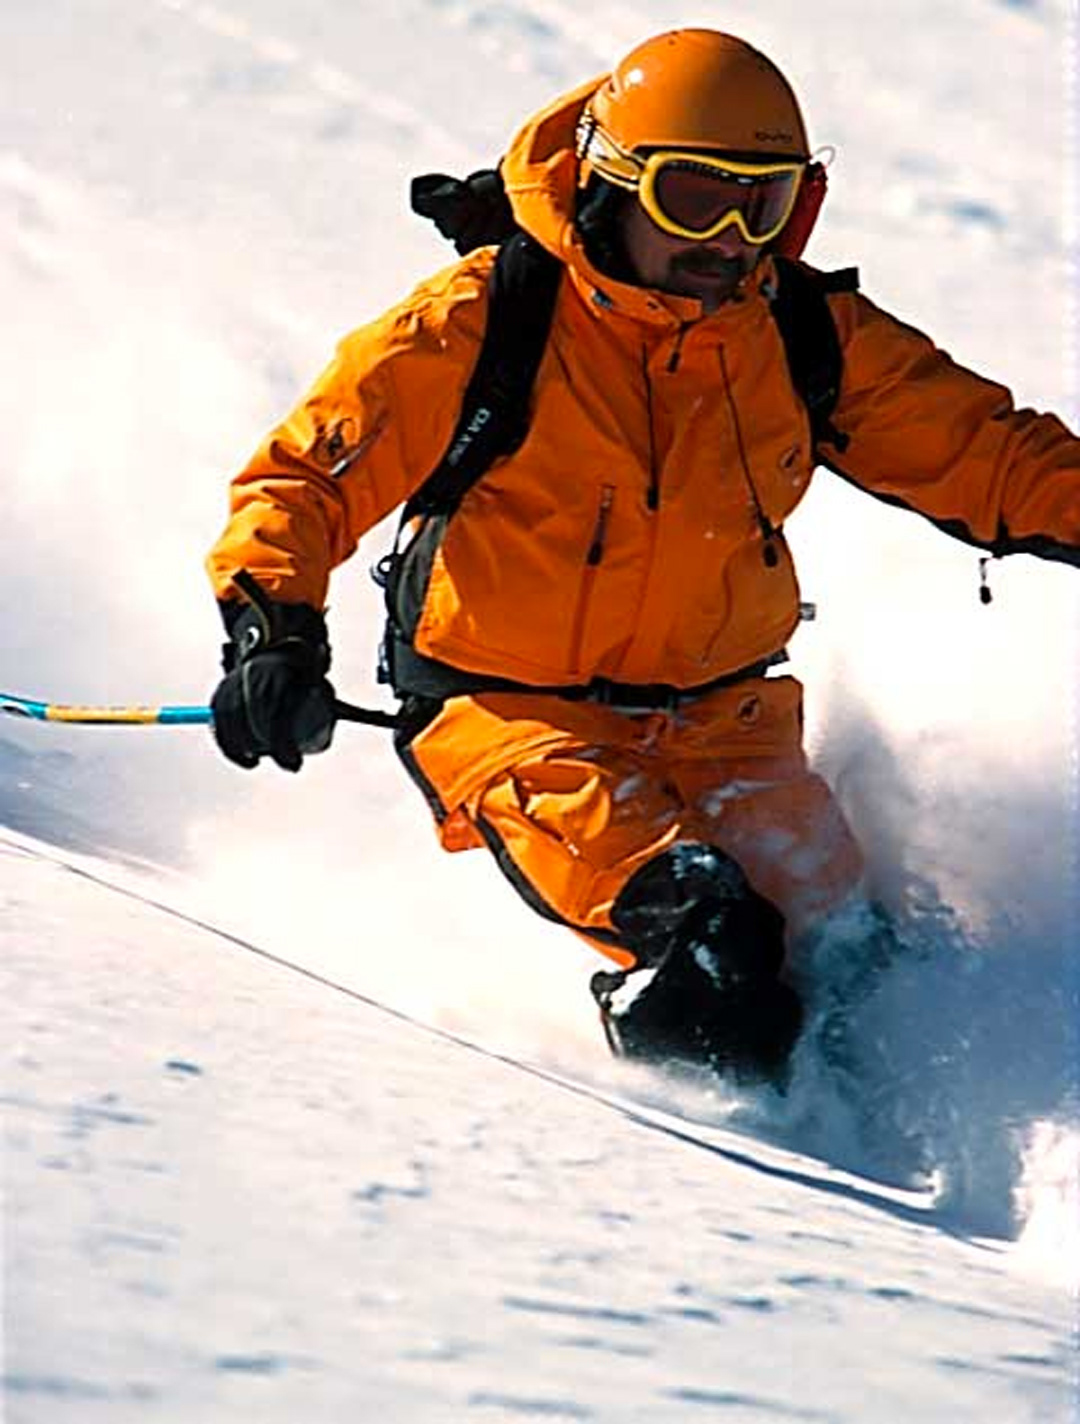 industrial designer Sports equipment designer Helmet Snowboarding